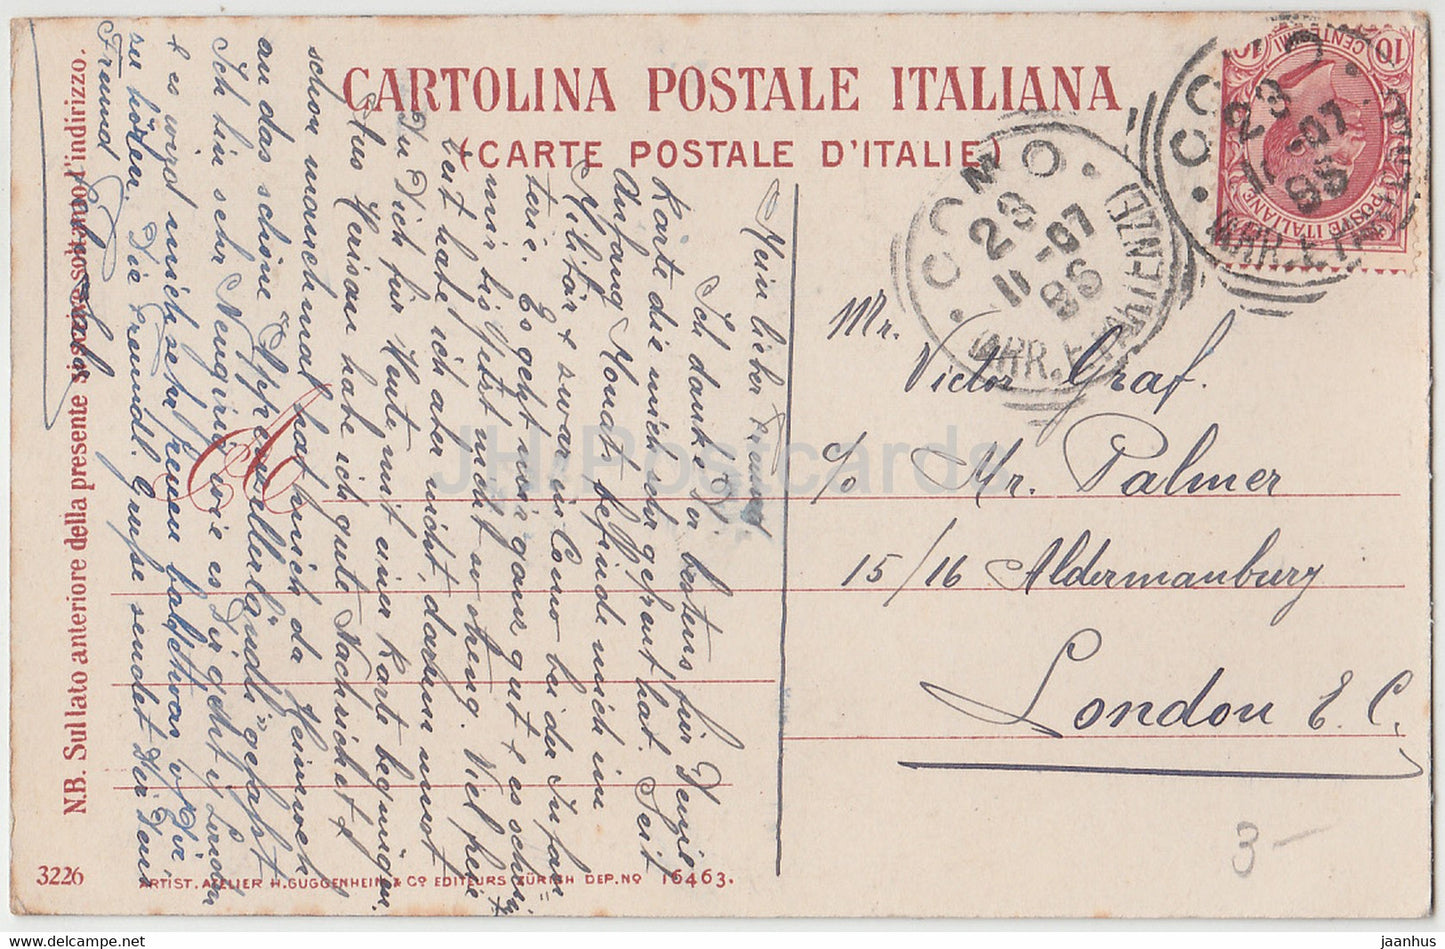 Frau - Lombardei - Volkstrachten - 3226 - alte Postkarte - Italien - gebraucht